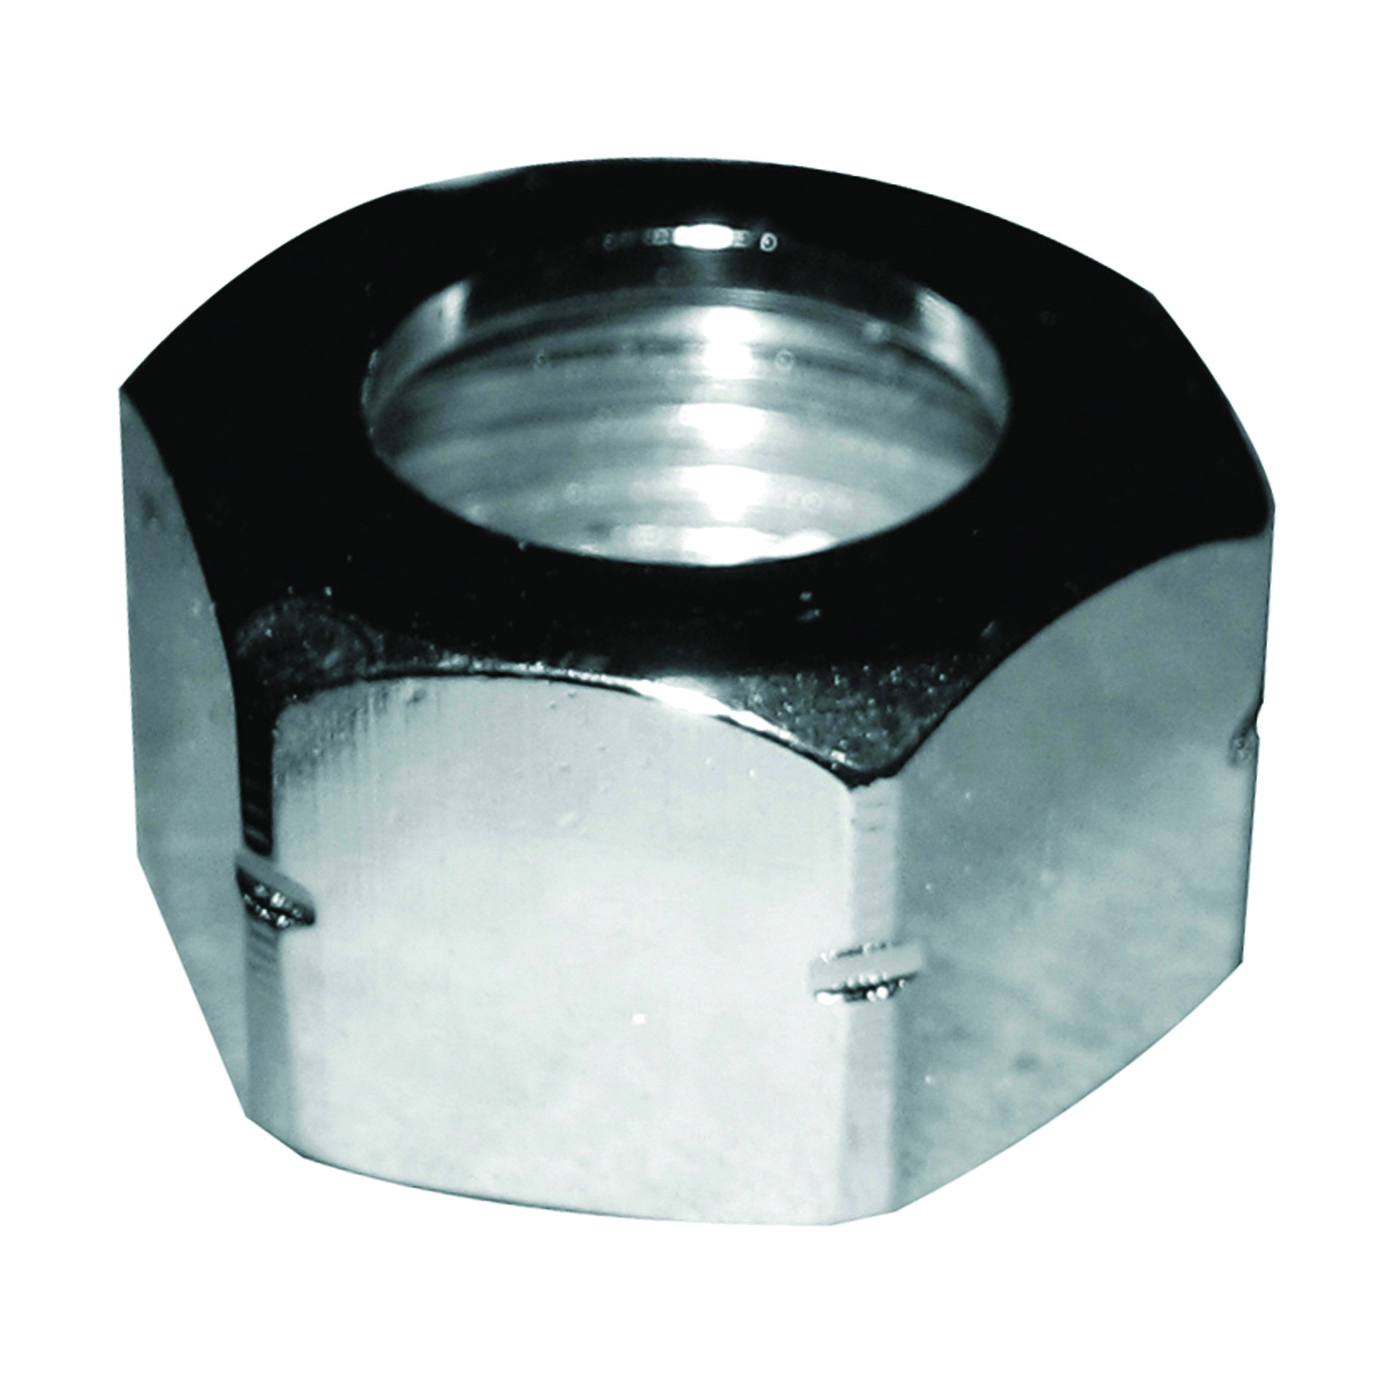 PP800-80 Basin Coupling Nut, Chrome Plated, For: Plumb Pak Basin Faucet Repair Parts and Kits